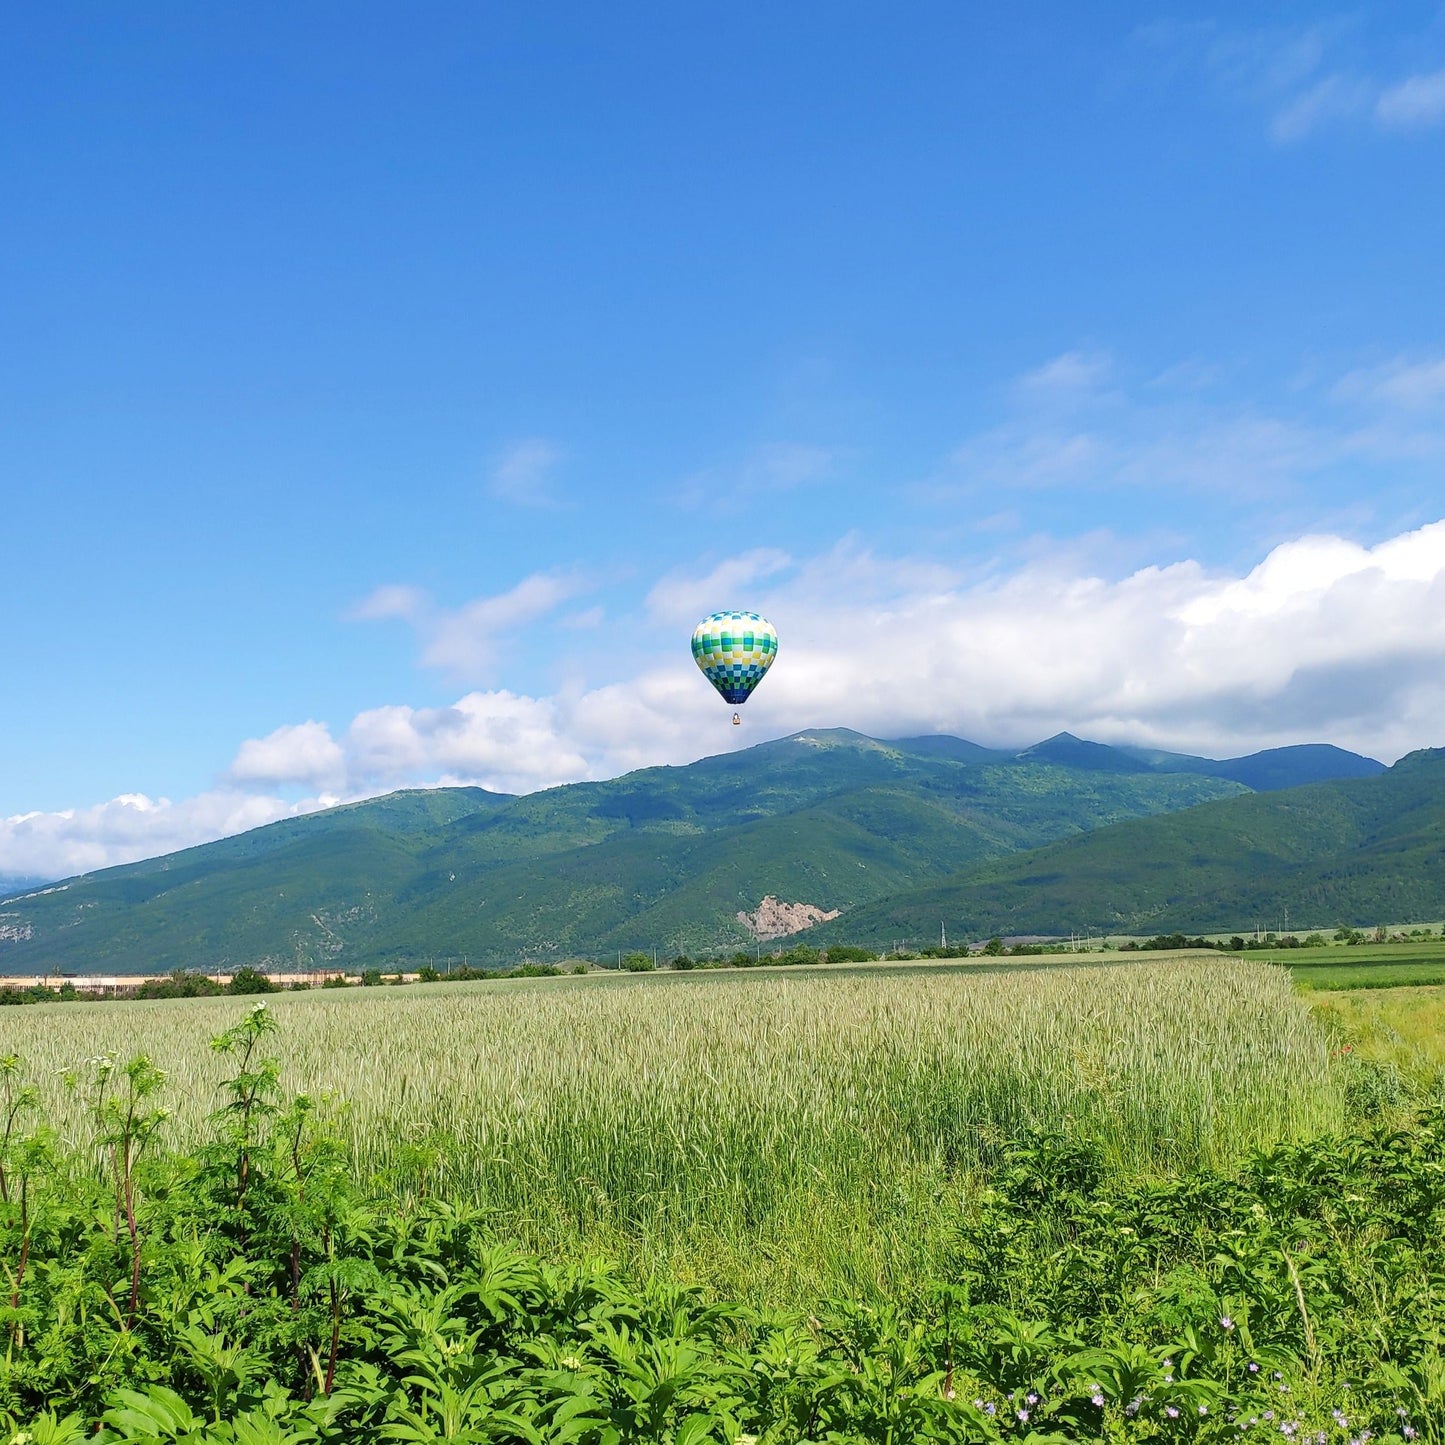 Hot Air Balloon free flight over the Belogradchik fortress